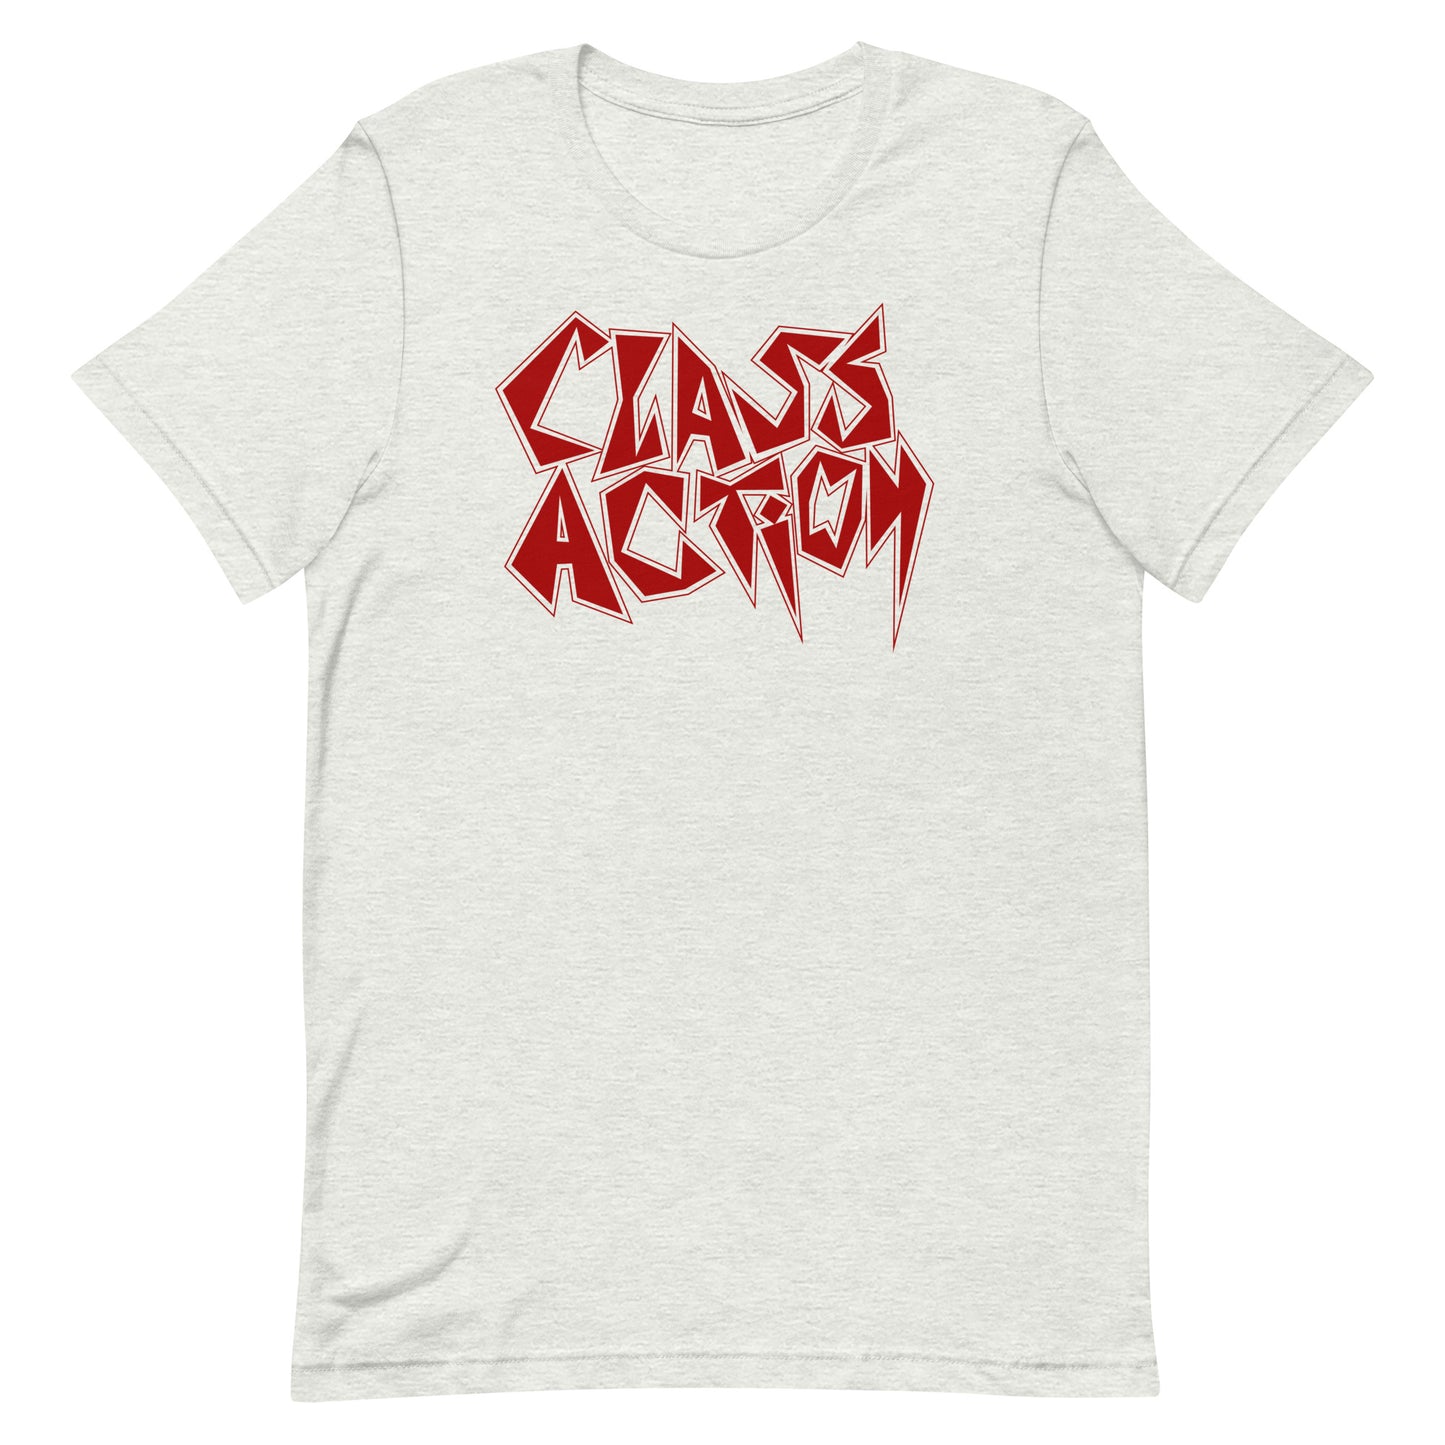 Class Action (Red) Shirt